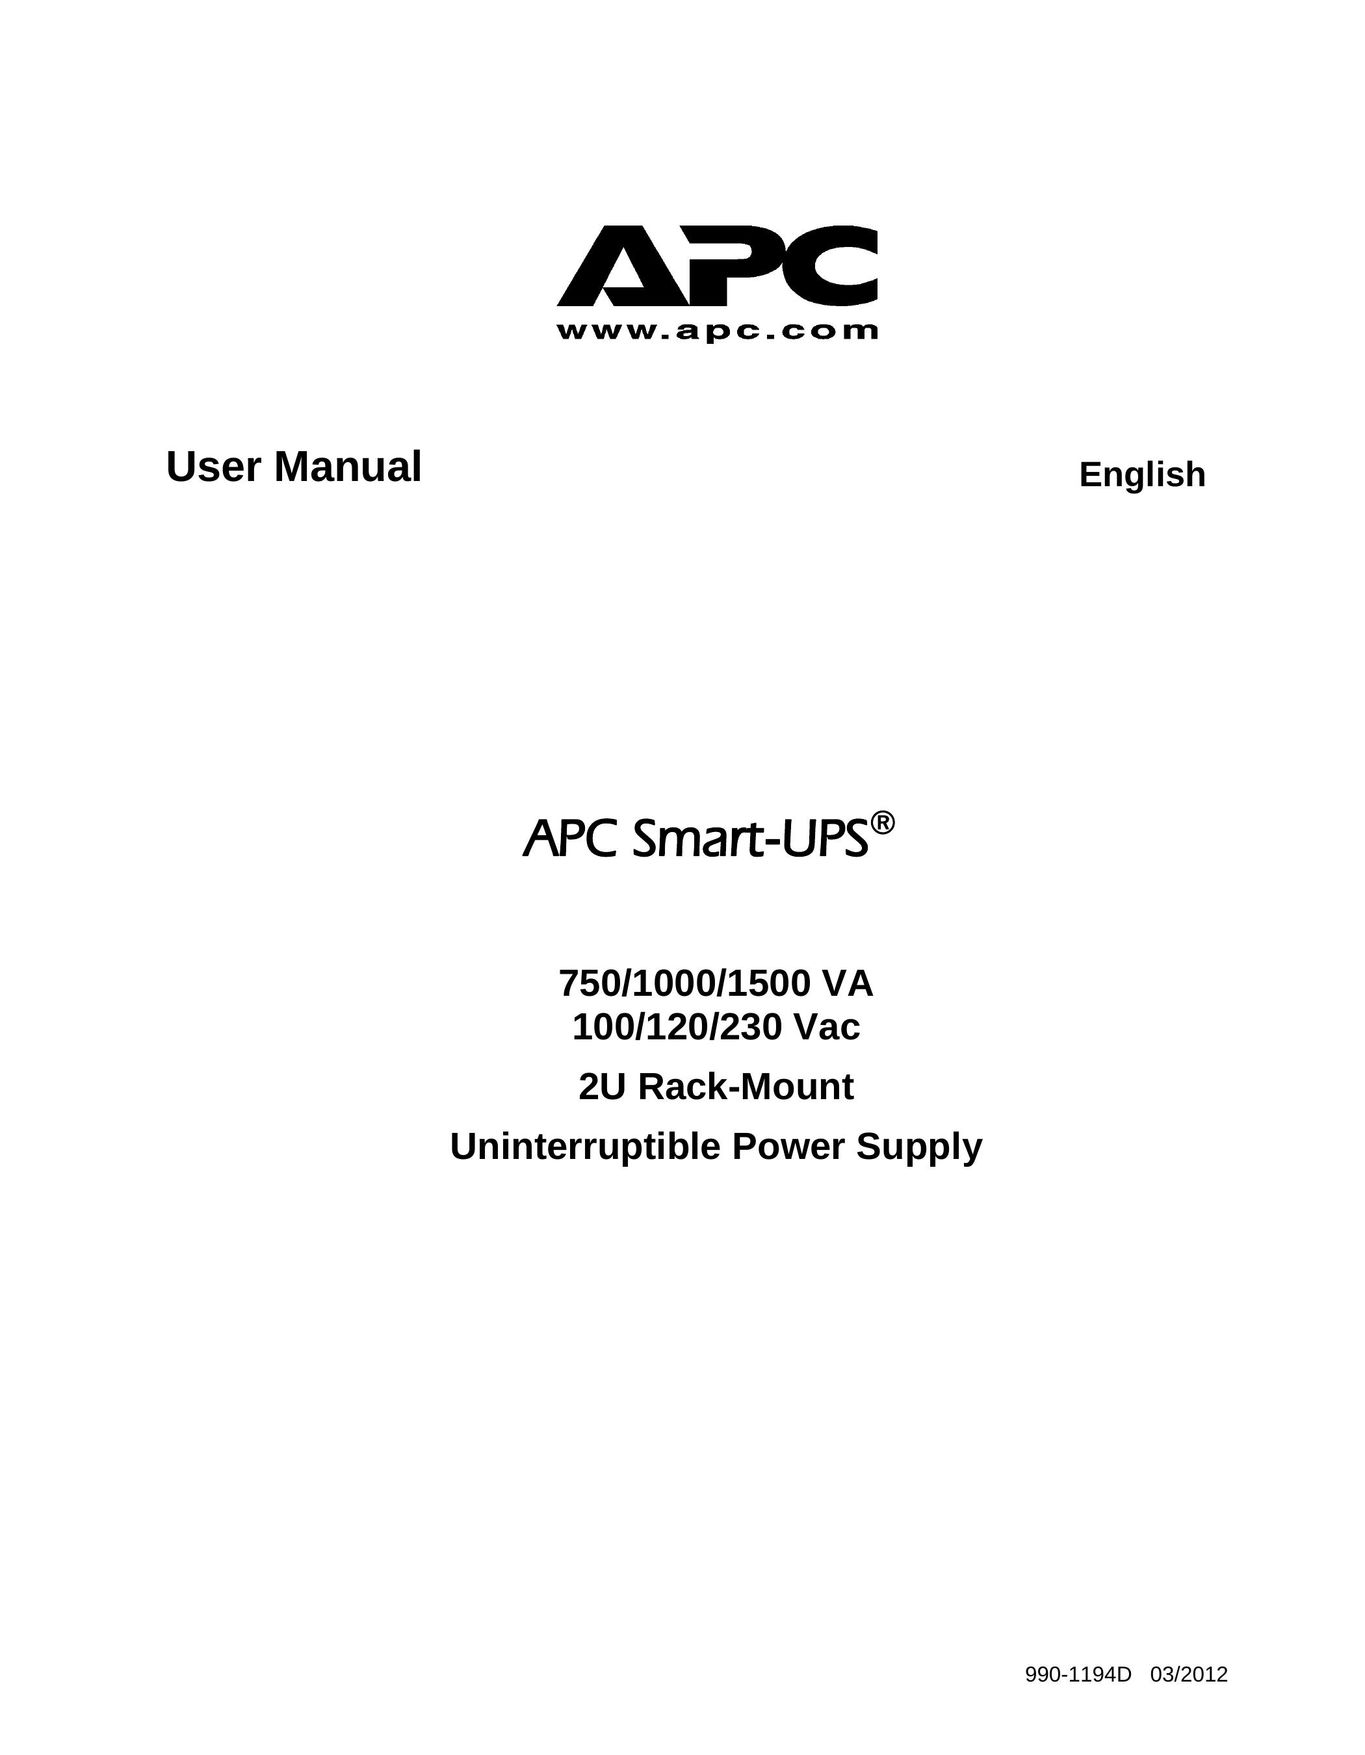 APC 100 Vac Power Supply User Manual